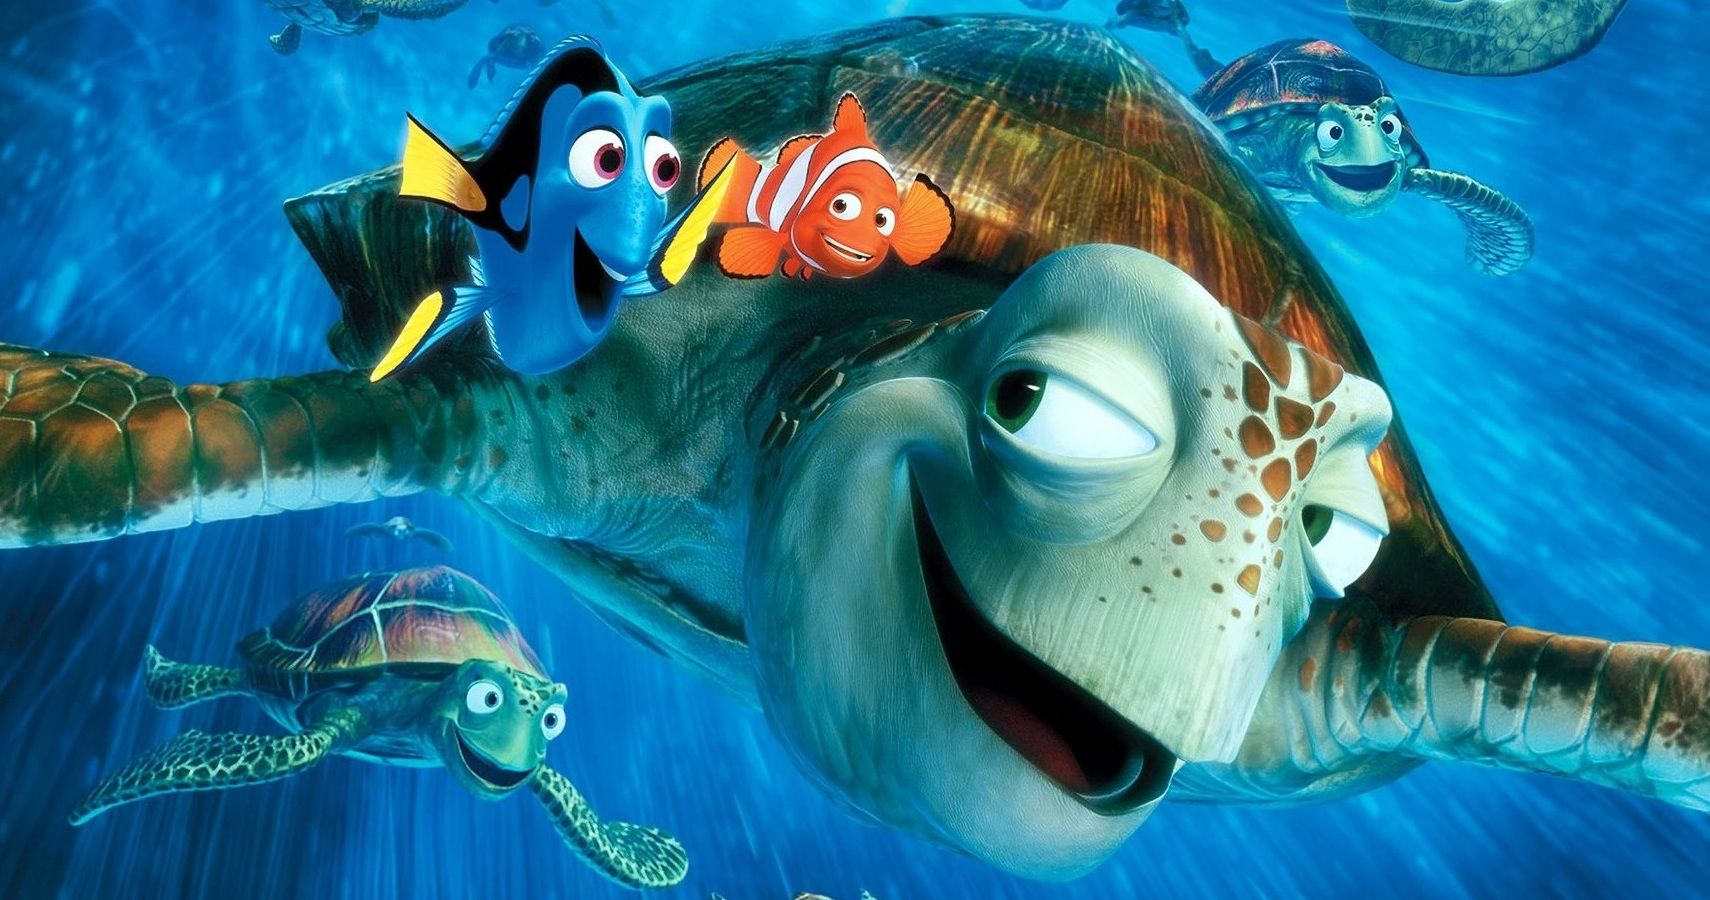 Finding Nemo S 5 Funniest 5 Saddest Moments Screenrant,Seasons 52 Asparagus Soup